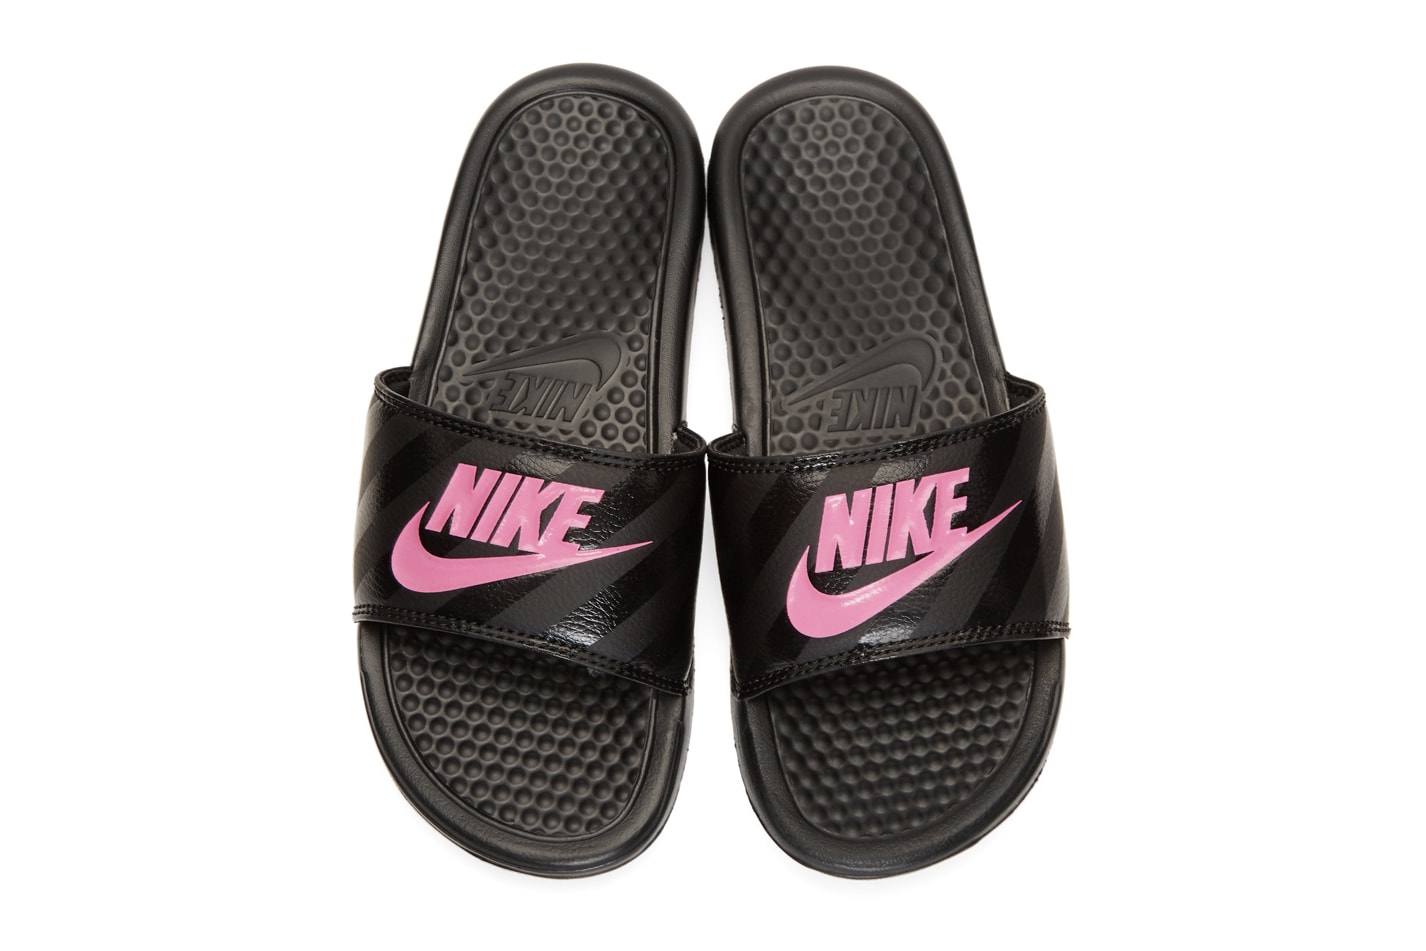 Nike Benassi Slides in Black Hot Pink Swoosh